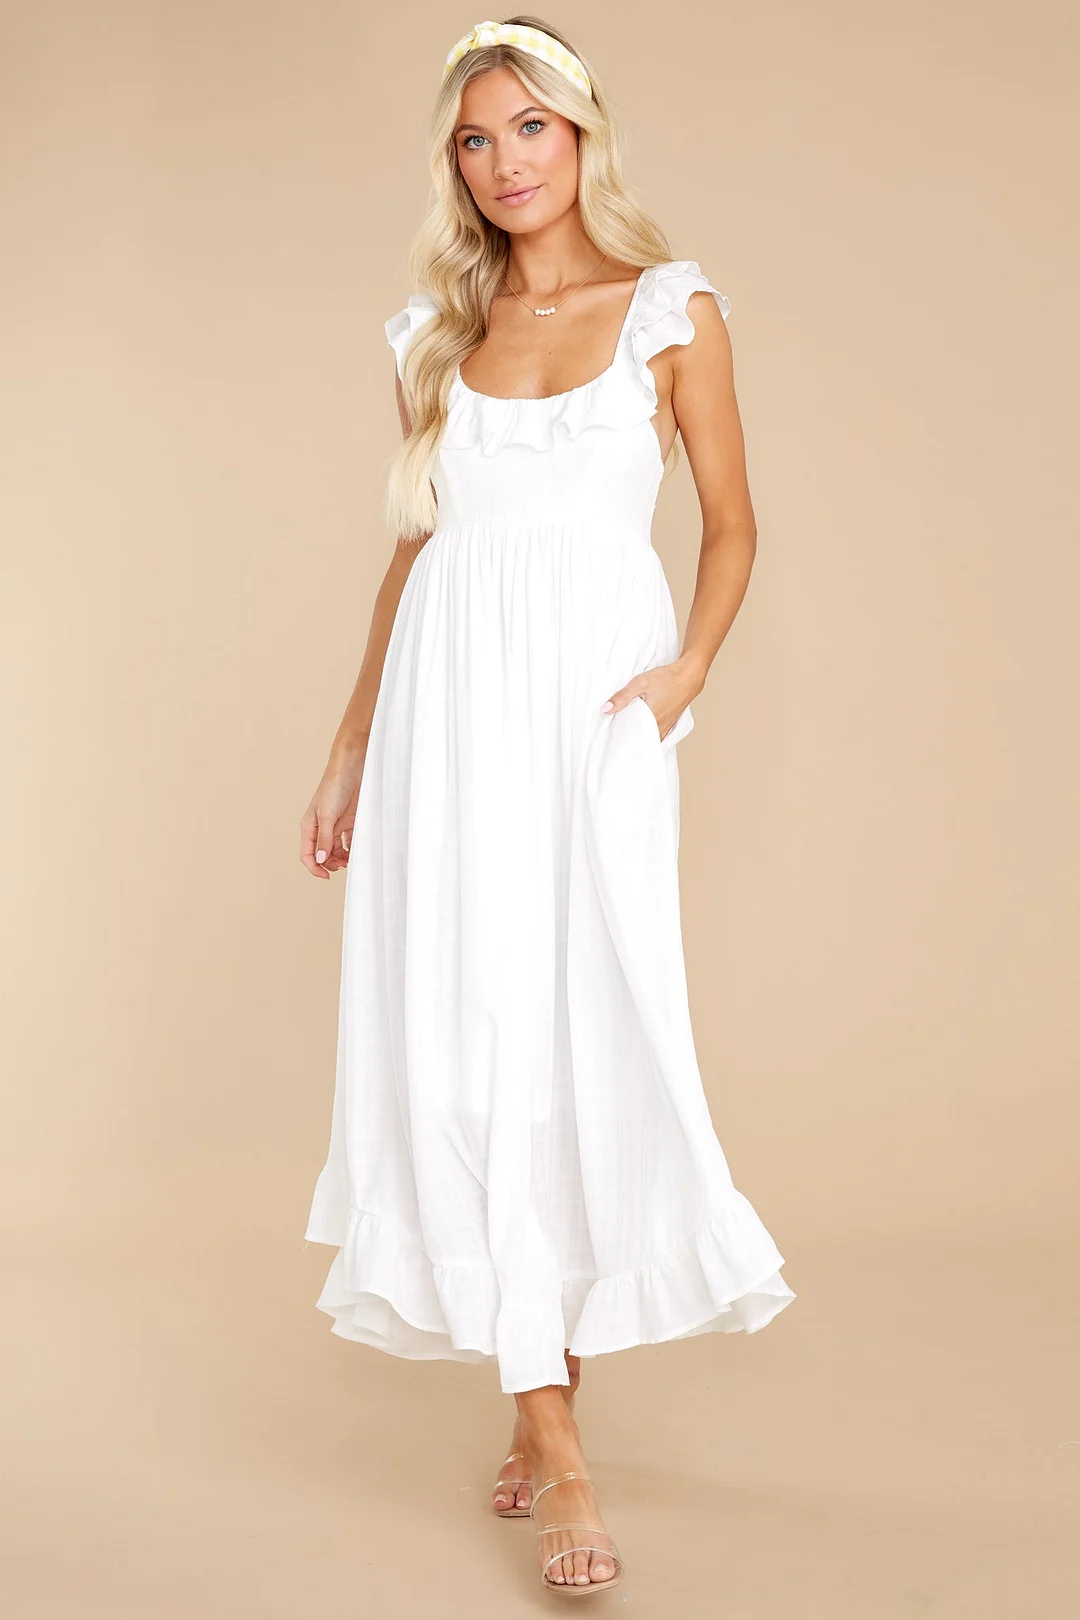 Your Dream Girl White Midi Dress